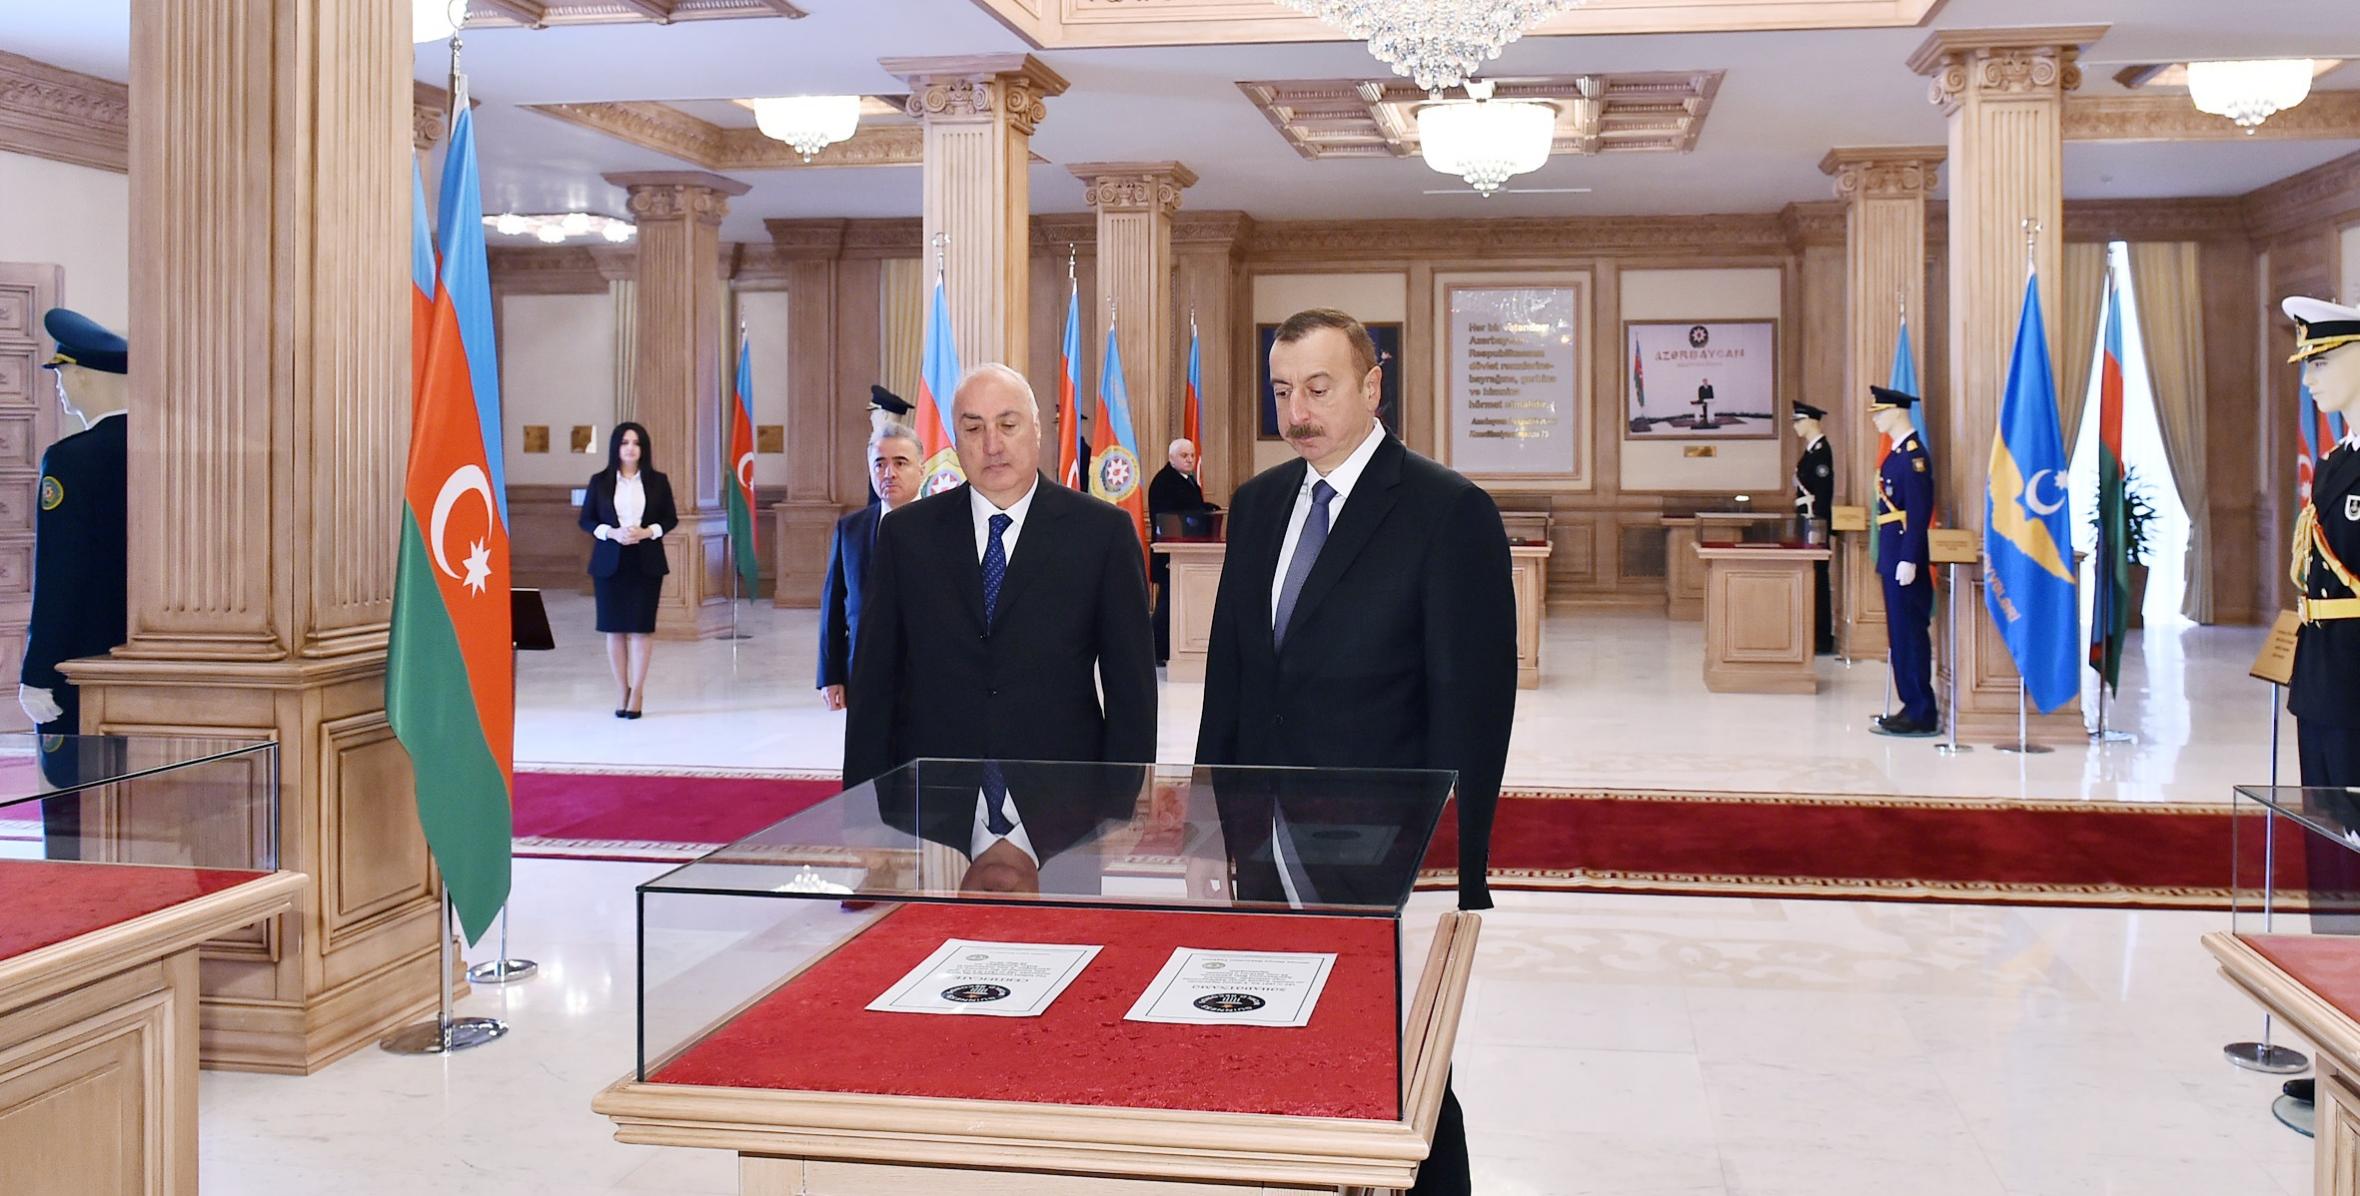 Ilham Aliyev inaugurated Flag Museum in Sumgayit